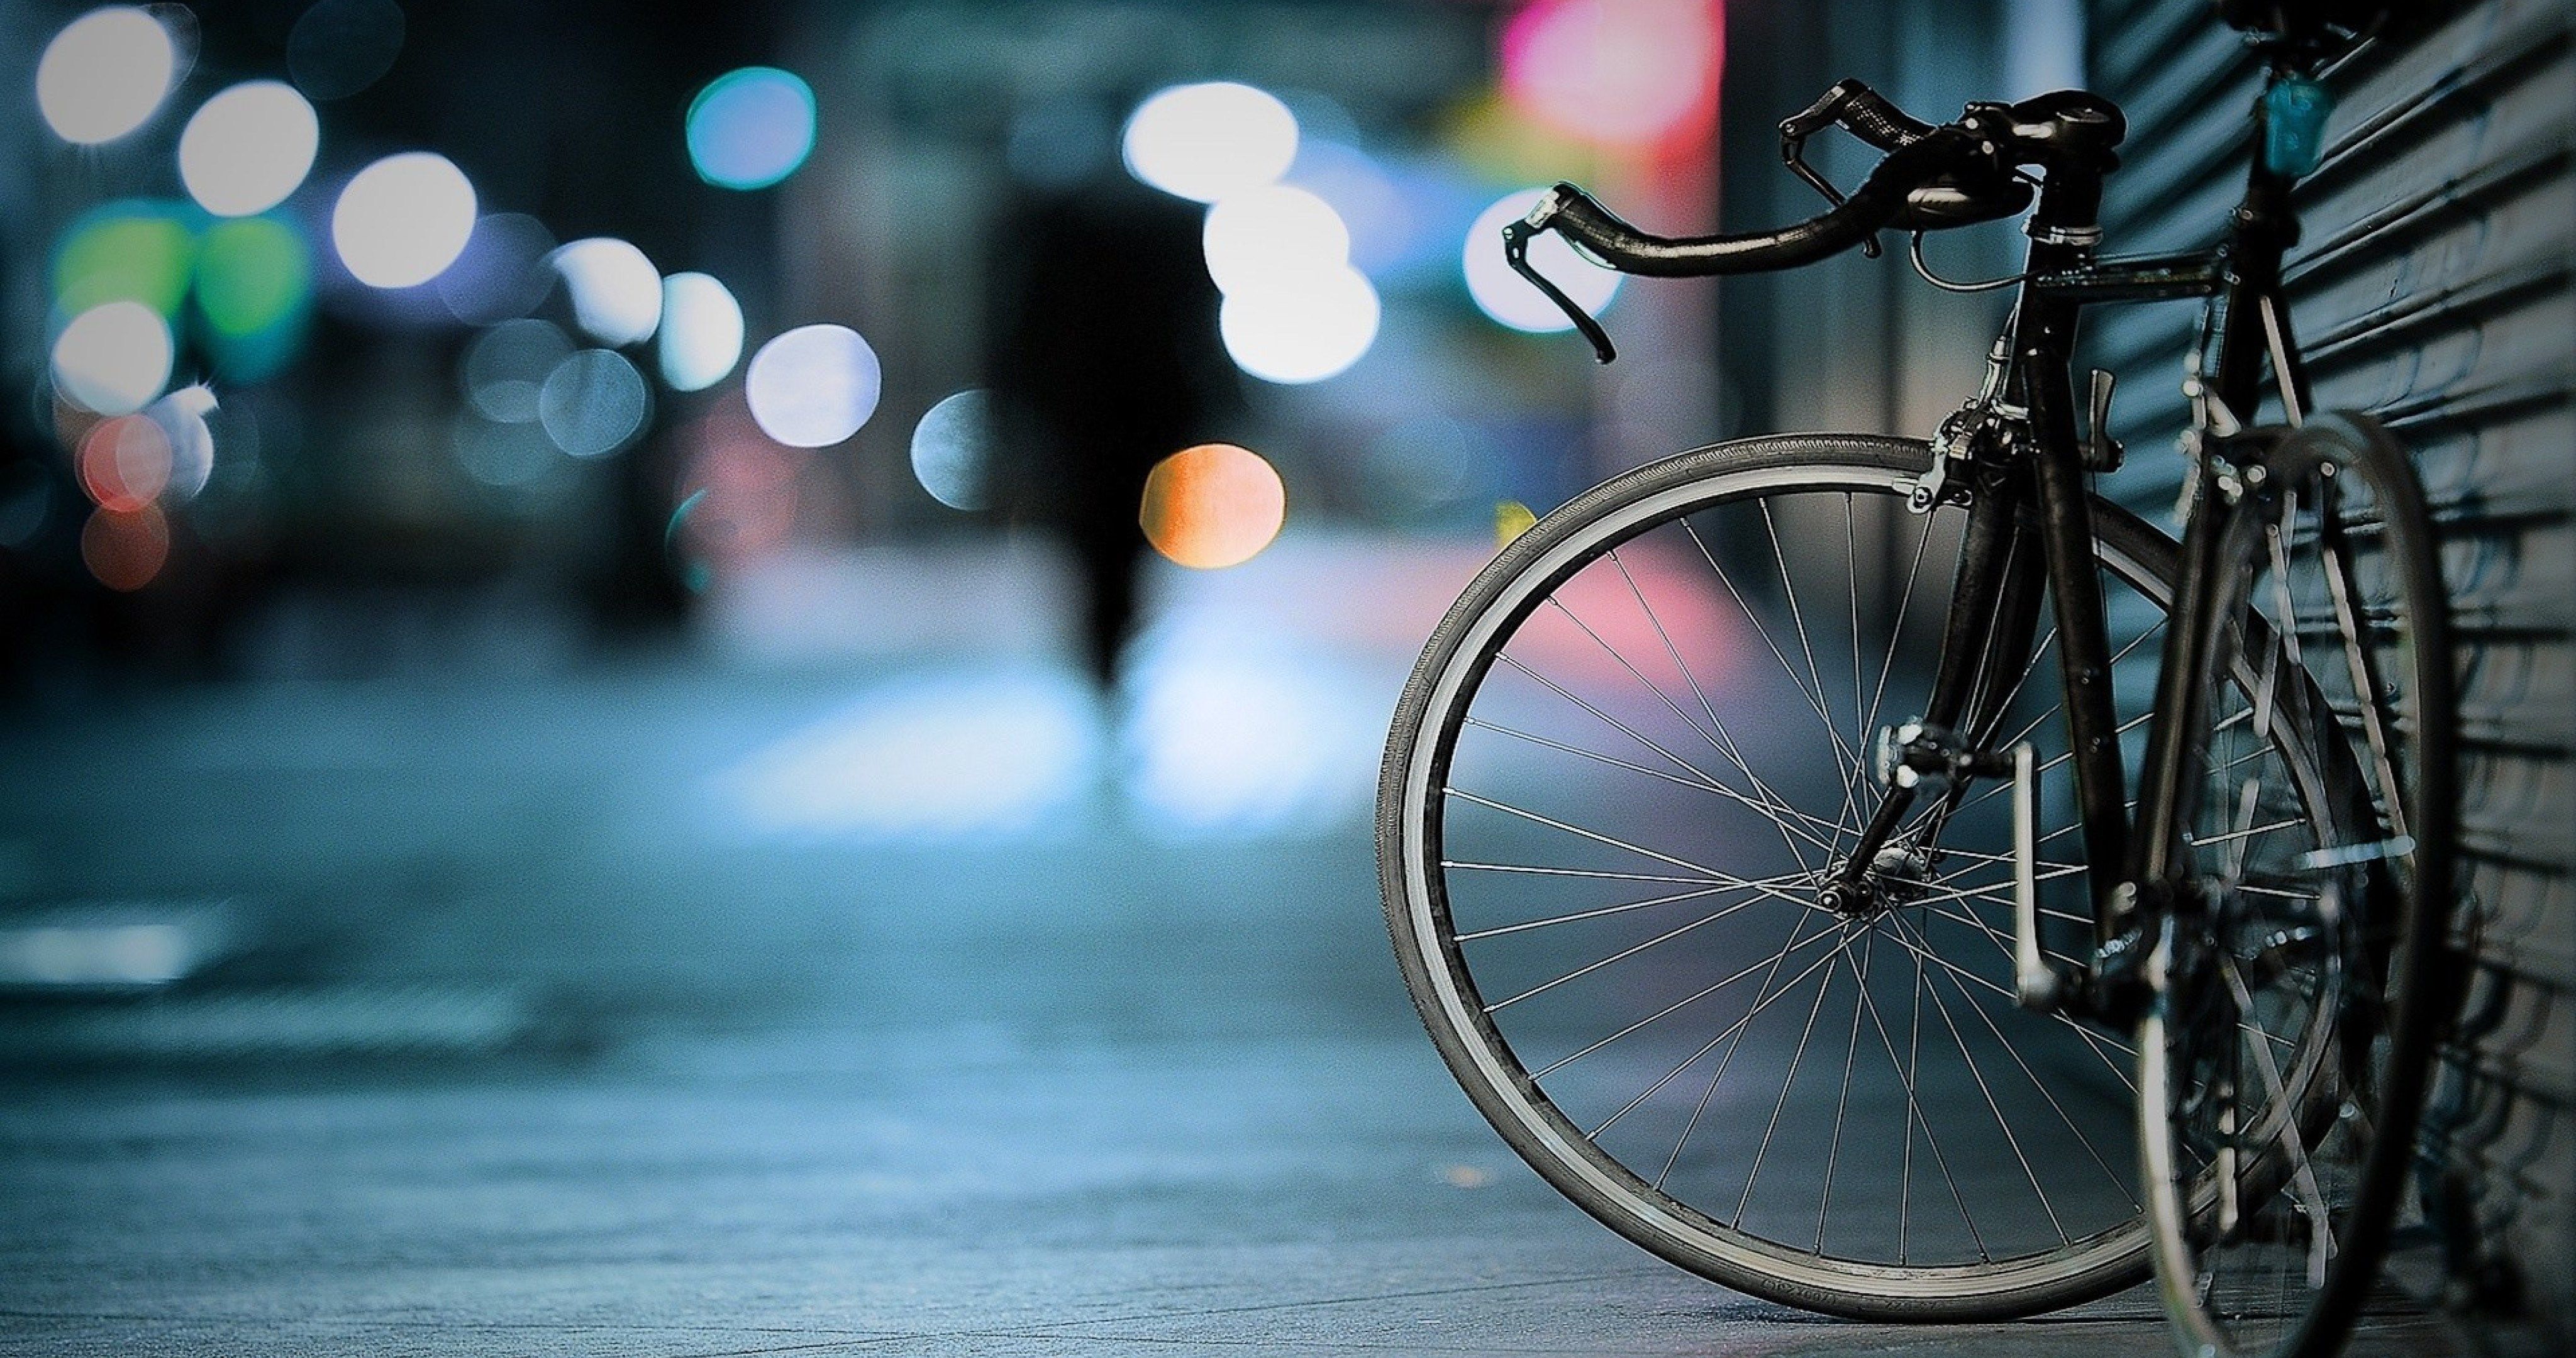 street bike 4k ultra HD wallpaper. Bicycle wallpaper